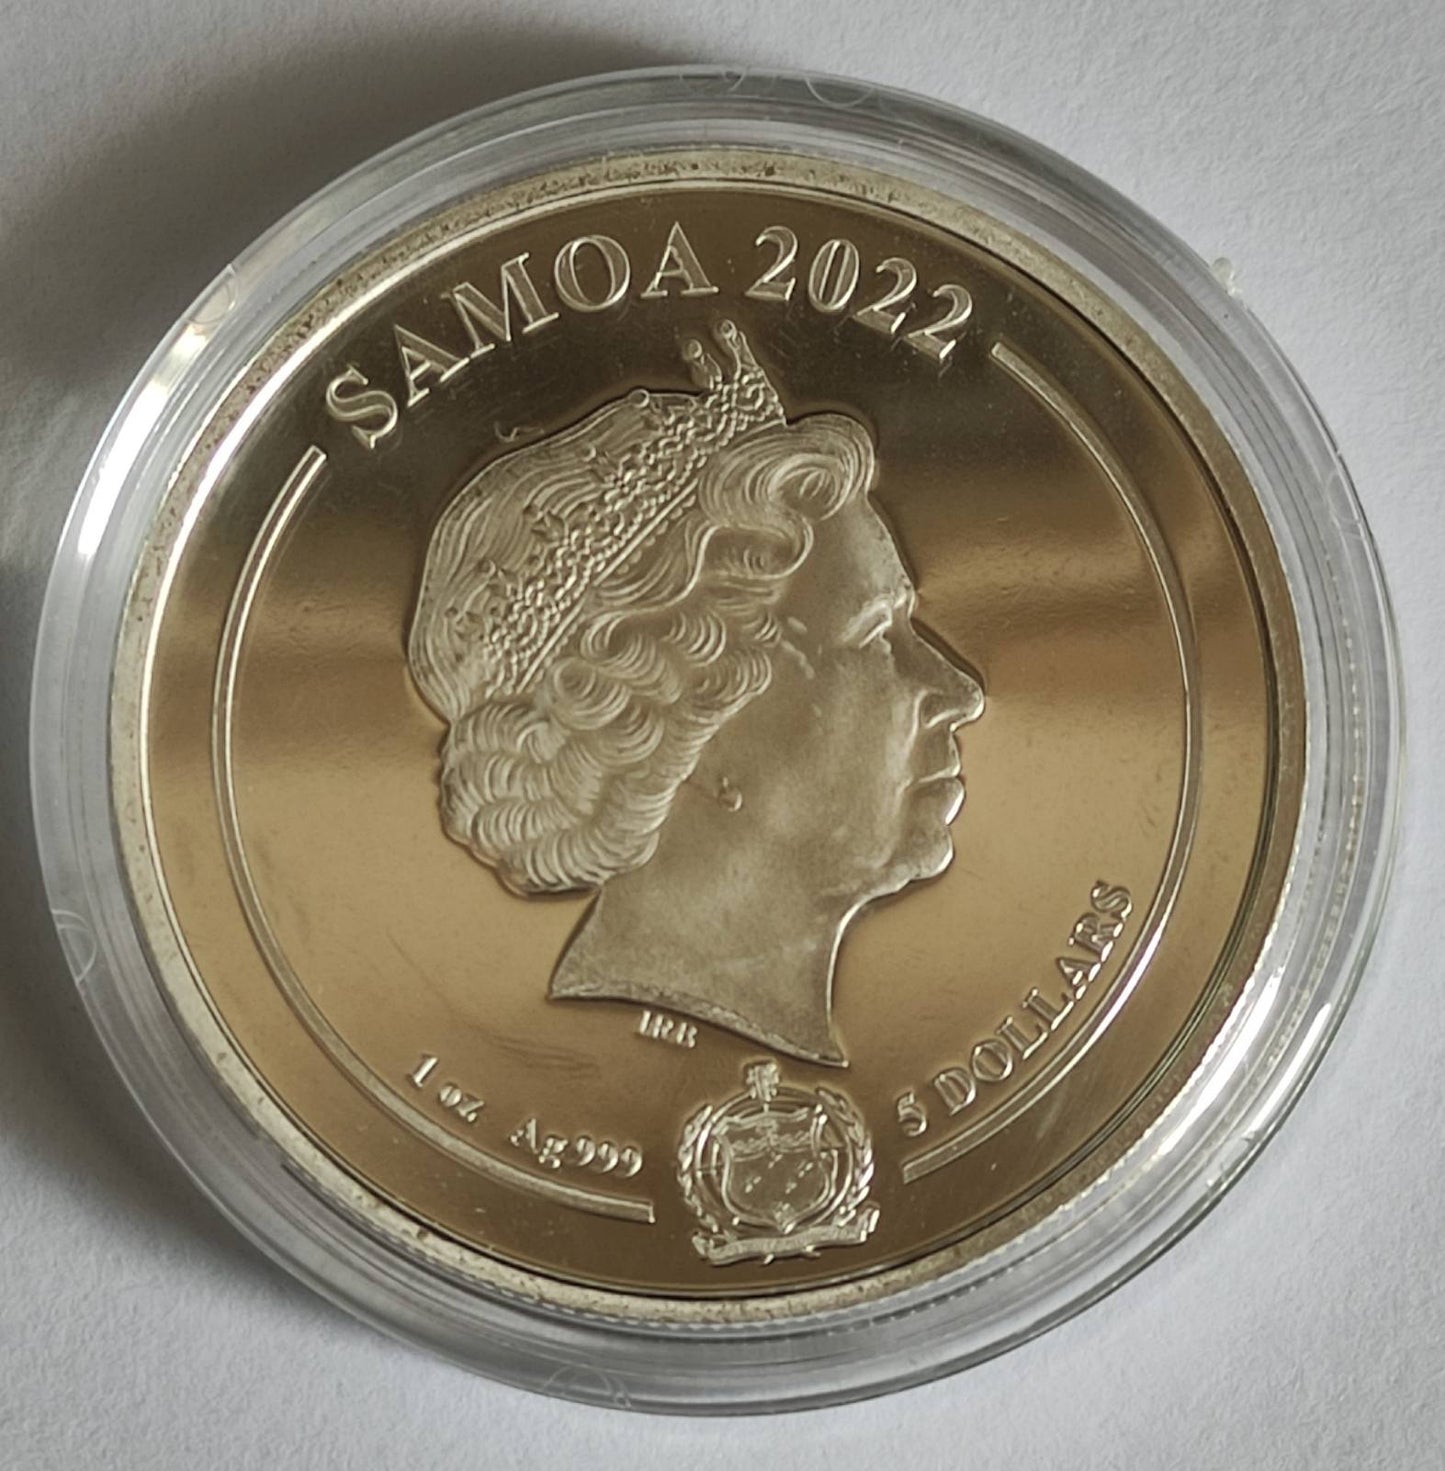 2022 Samoa Looney Tunes Daffy Duck 1 oz Silver Coin BU in Capsule